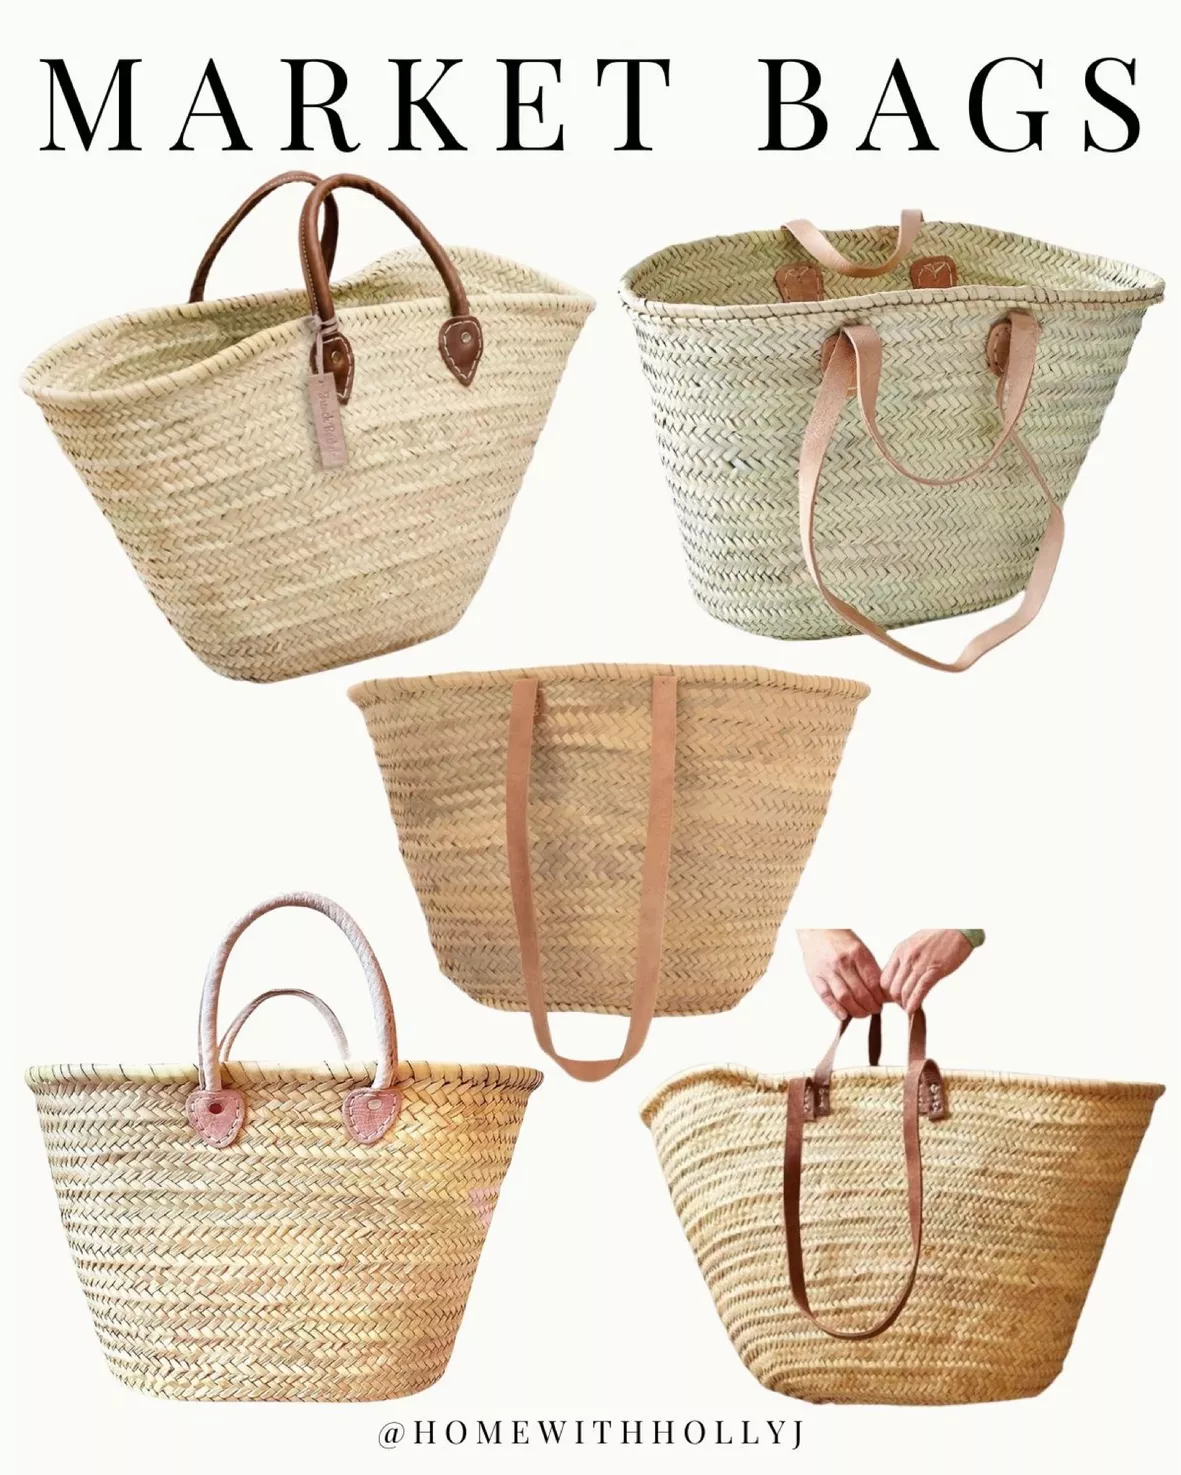  AnewStraw Basket Straw Market Basket Bag with Long